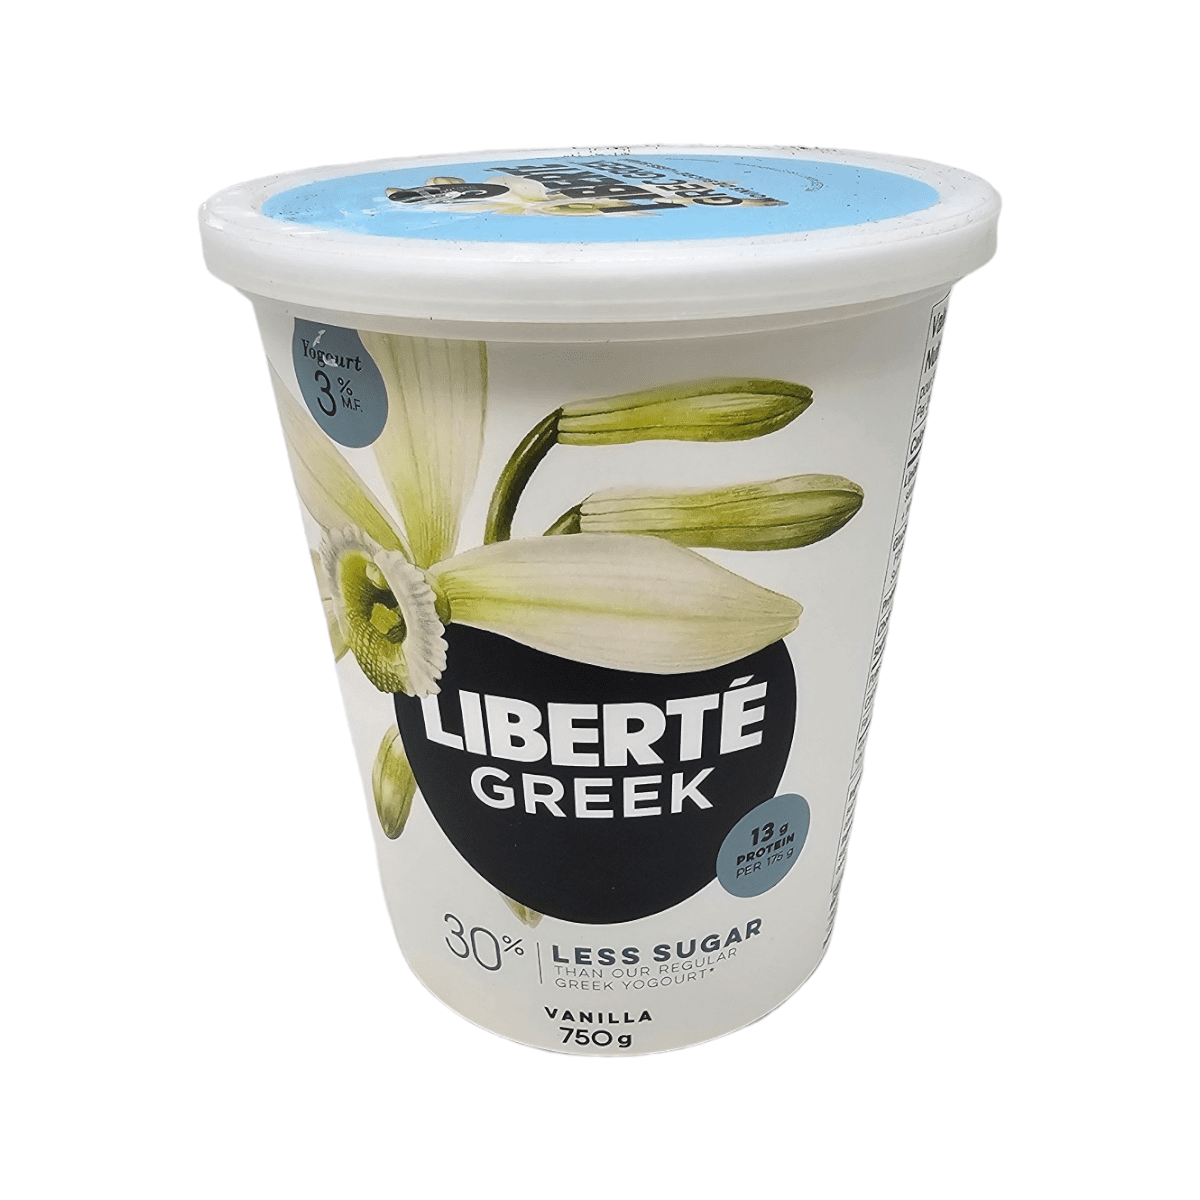 liberte greek less sugar vanilla 3% 750g